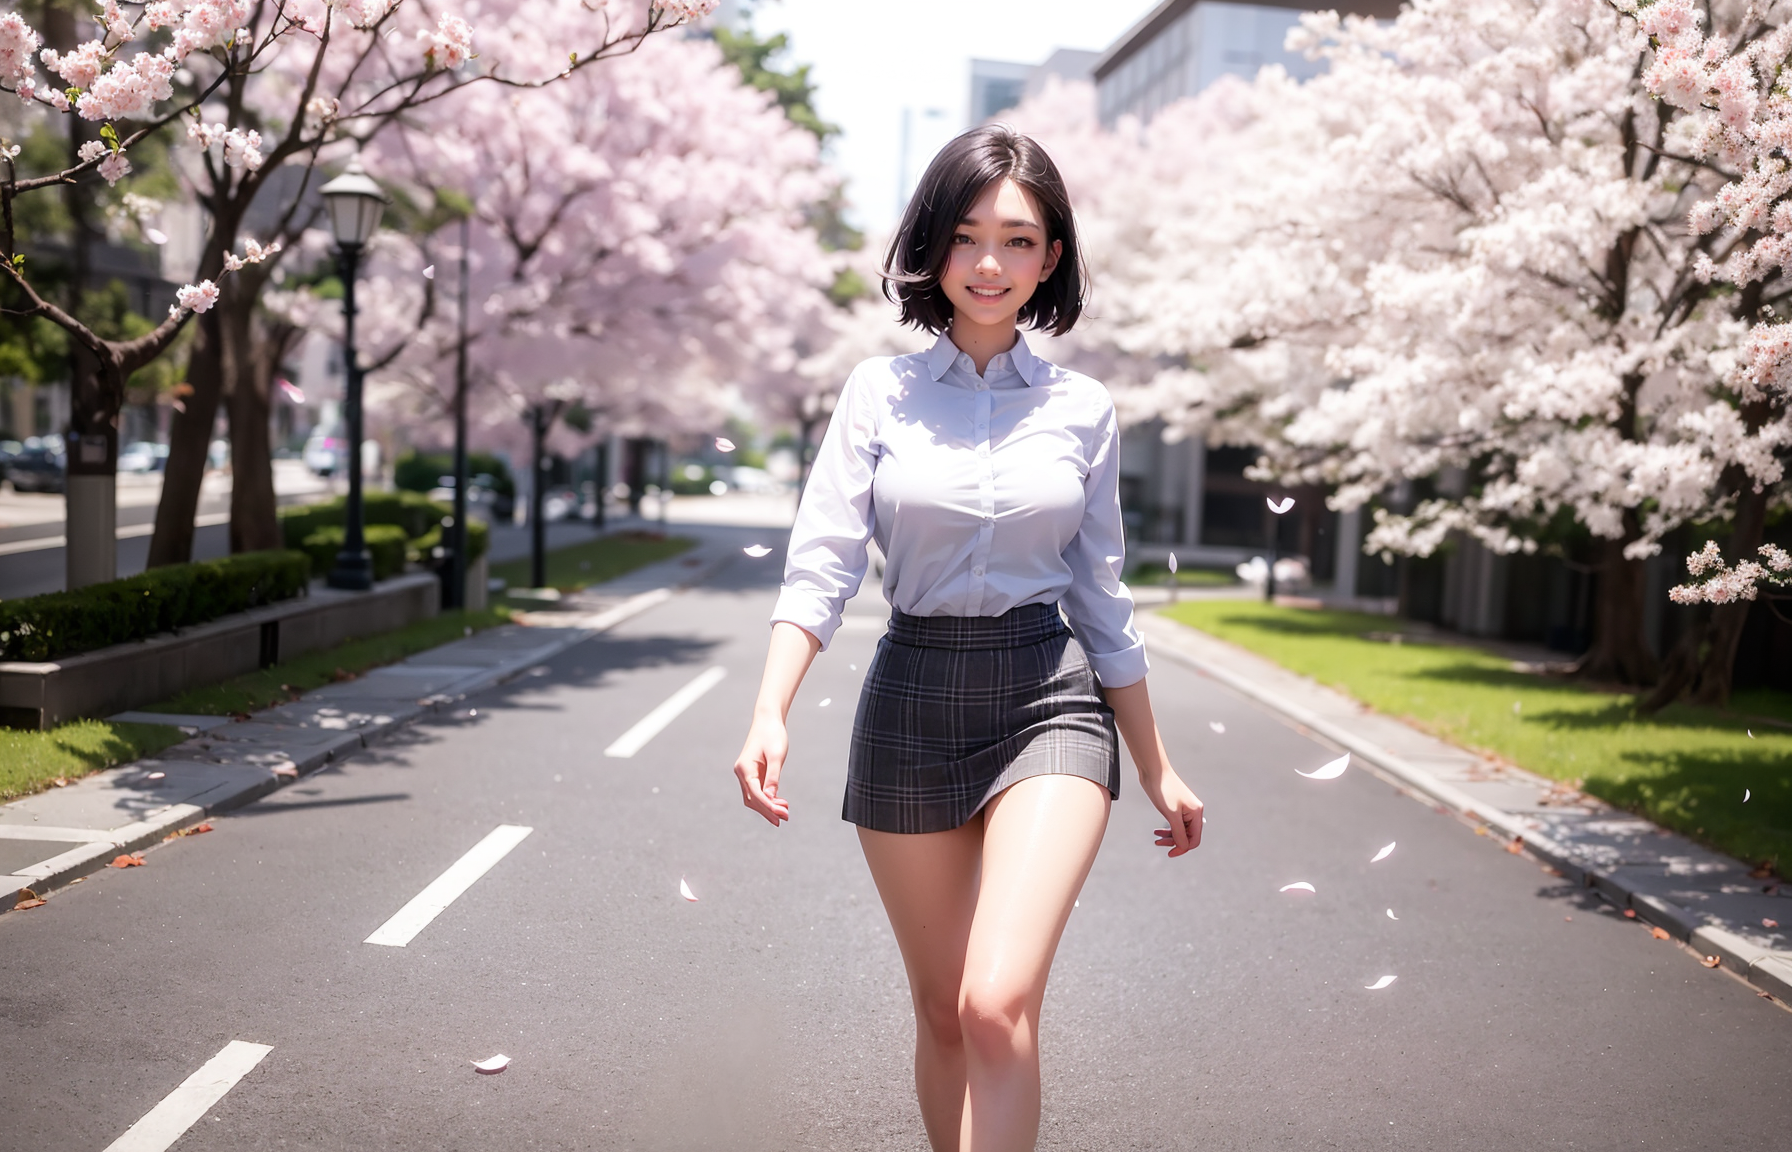 Ai Art Women Asian Smiling Looking At Viewer Road Petals Trees Short Hair Skirt Legs 1792x1152